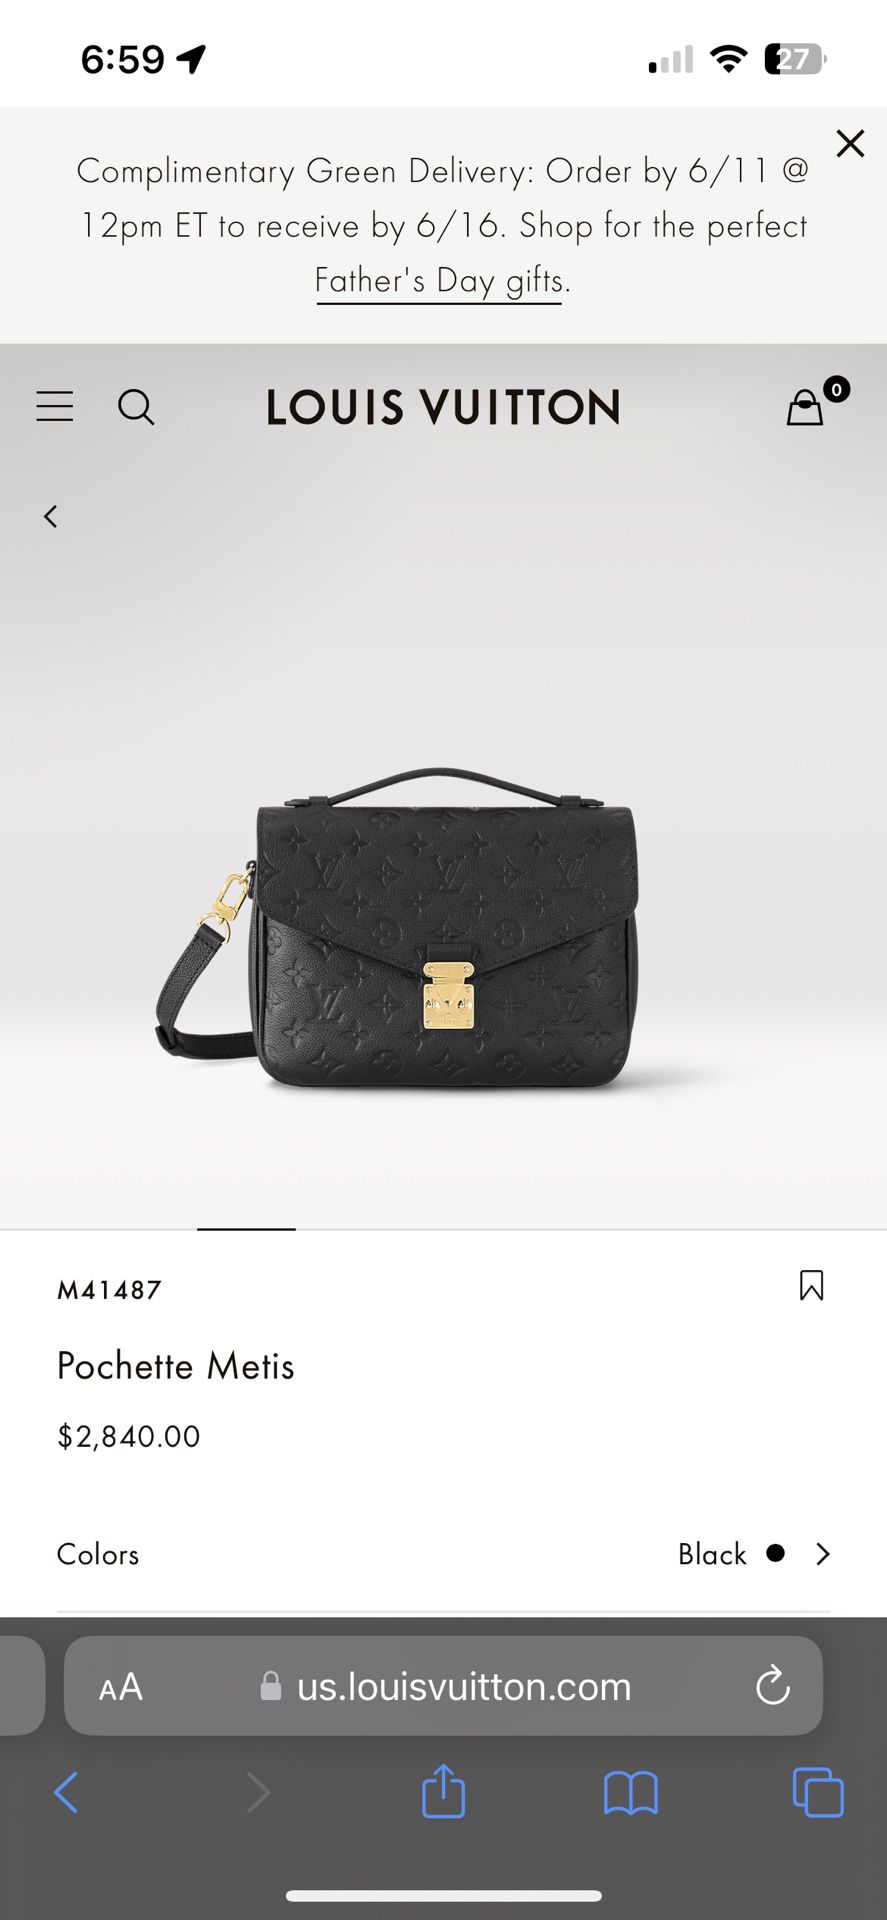 Louis Vuitton Pochette Metis Bag for Sale in Redwood City, CA